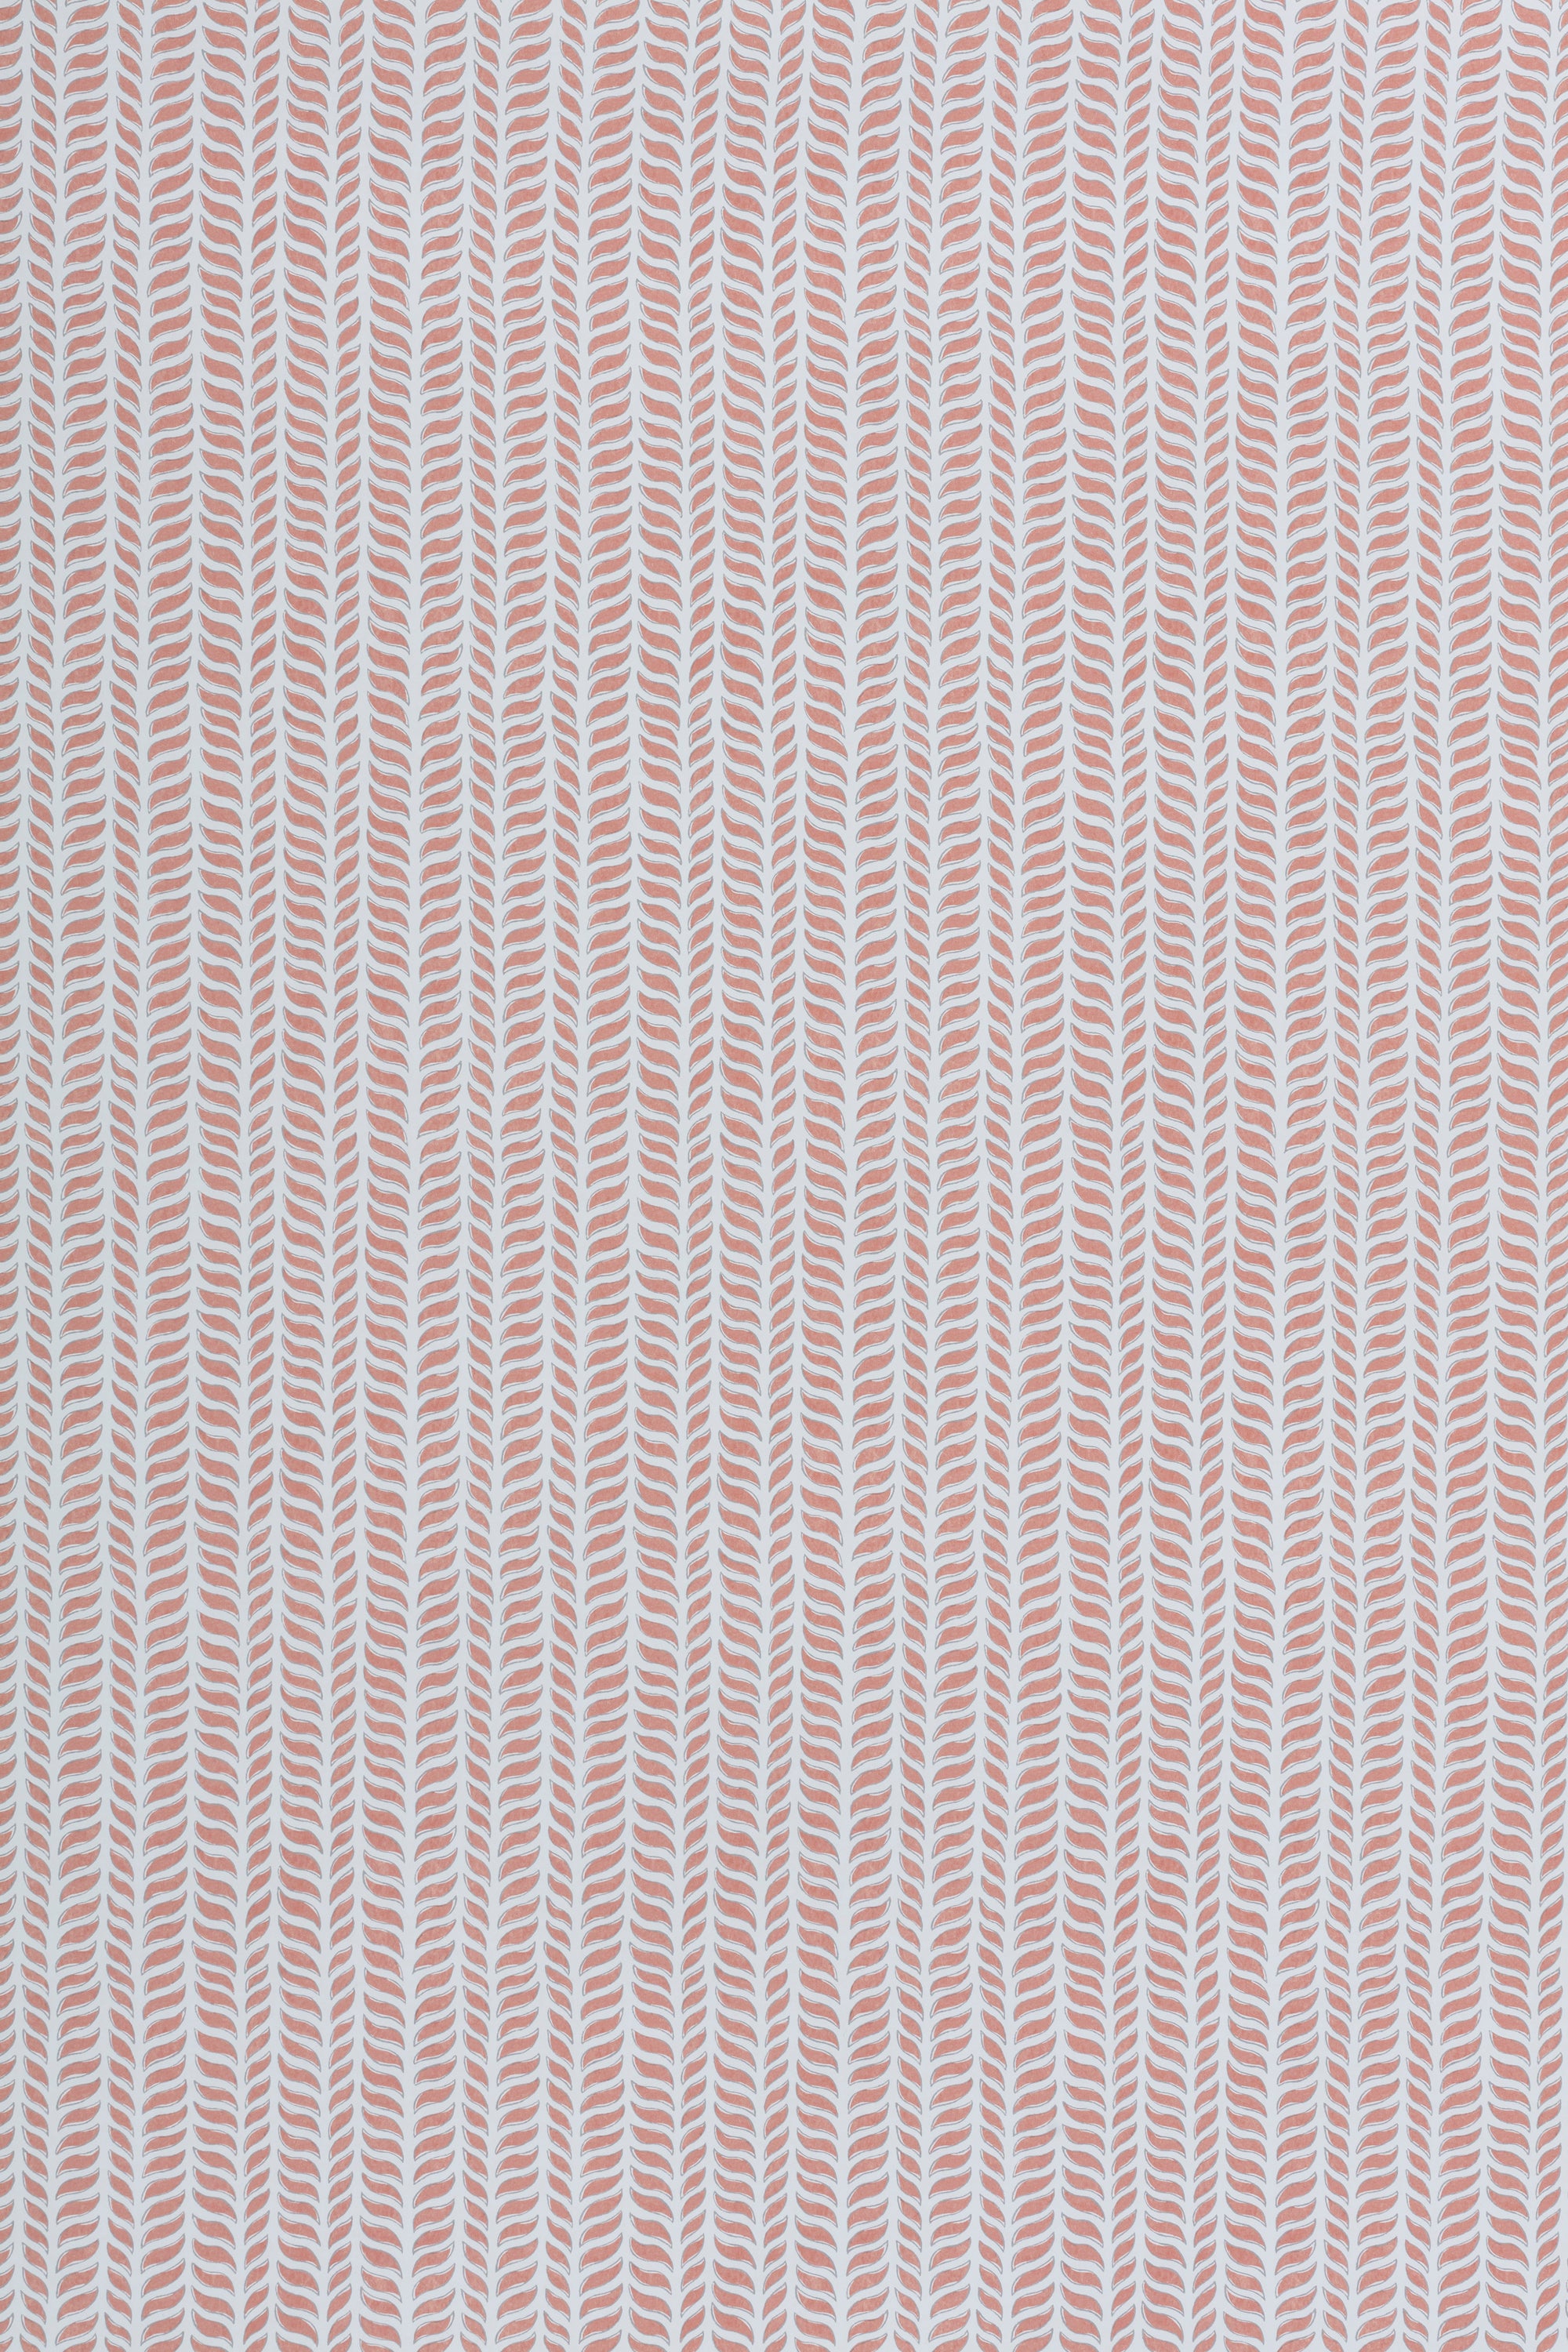 Wallpaper panel in a painterly herringbone print in pink on a light blue field.